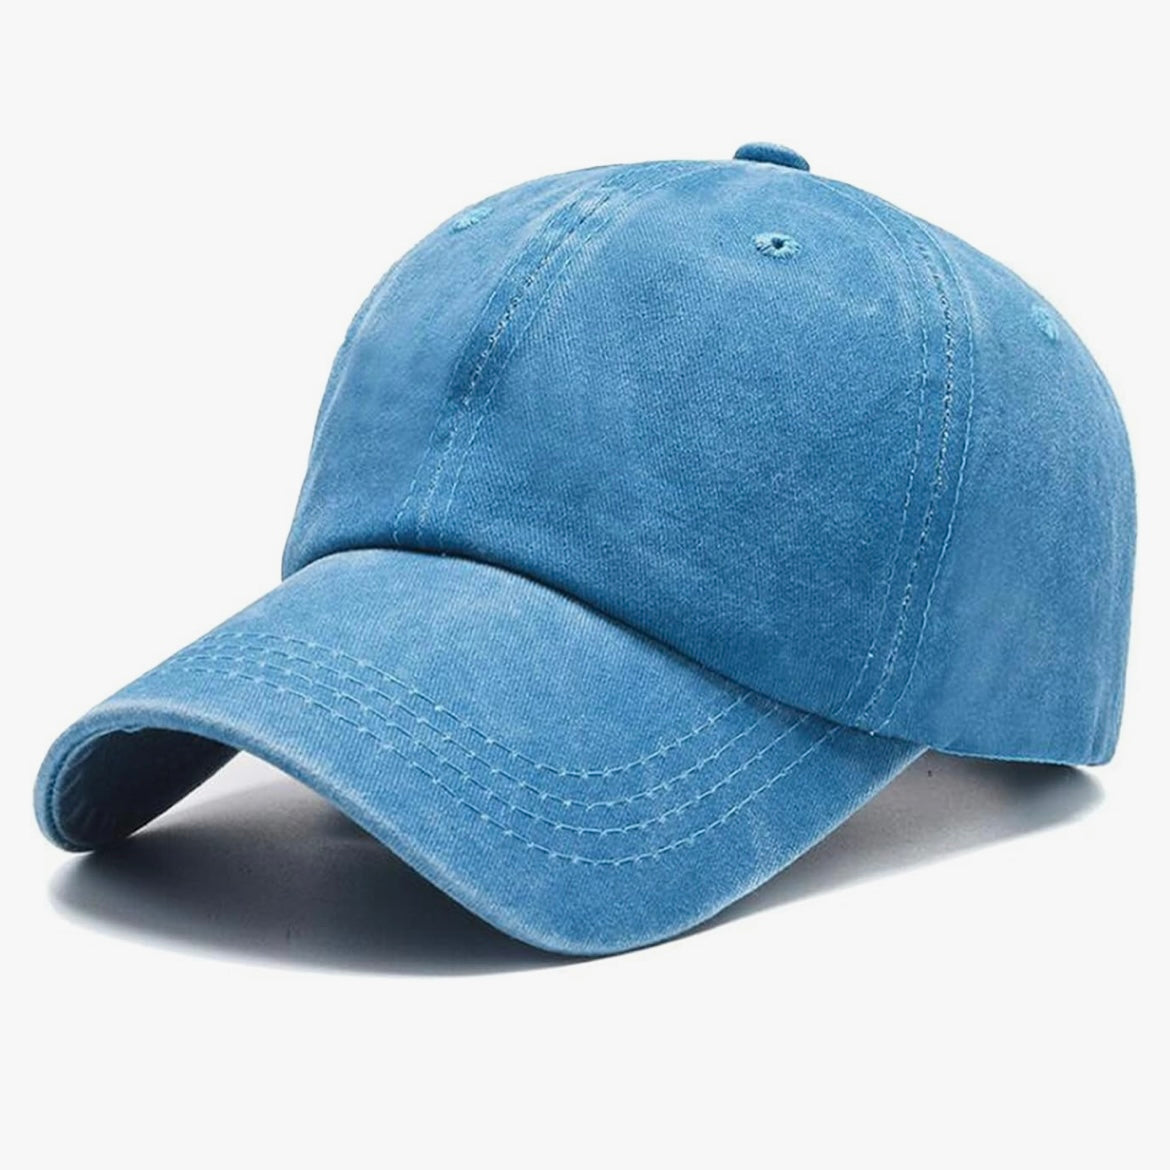 DESIGN YOUR OWN-Baseball cap